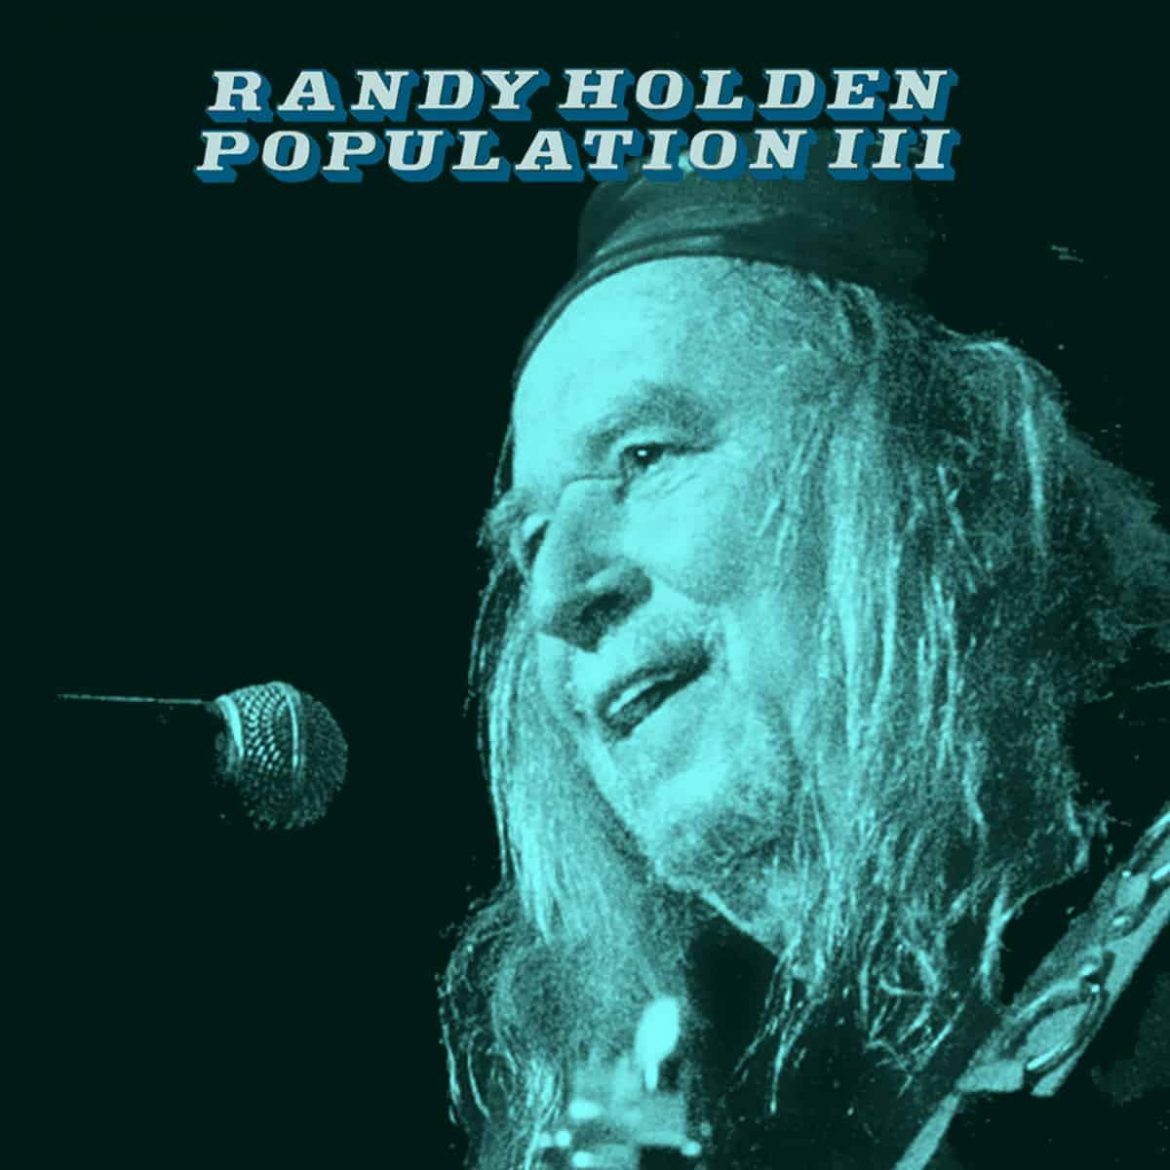 Randy Holden "Population III"